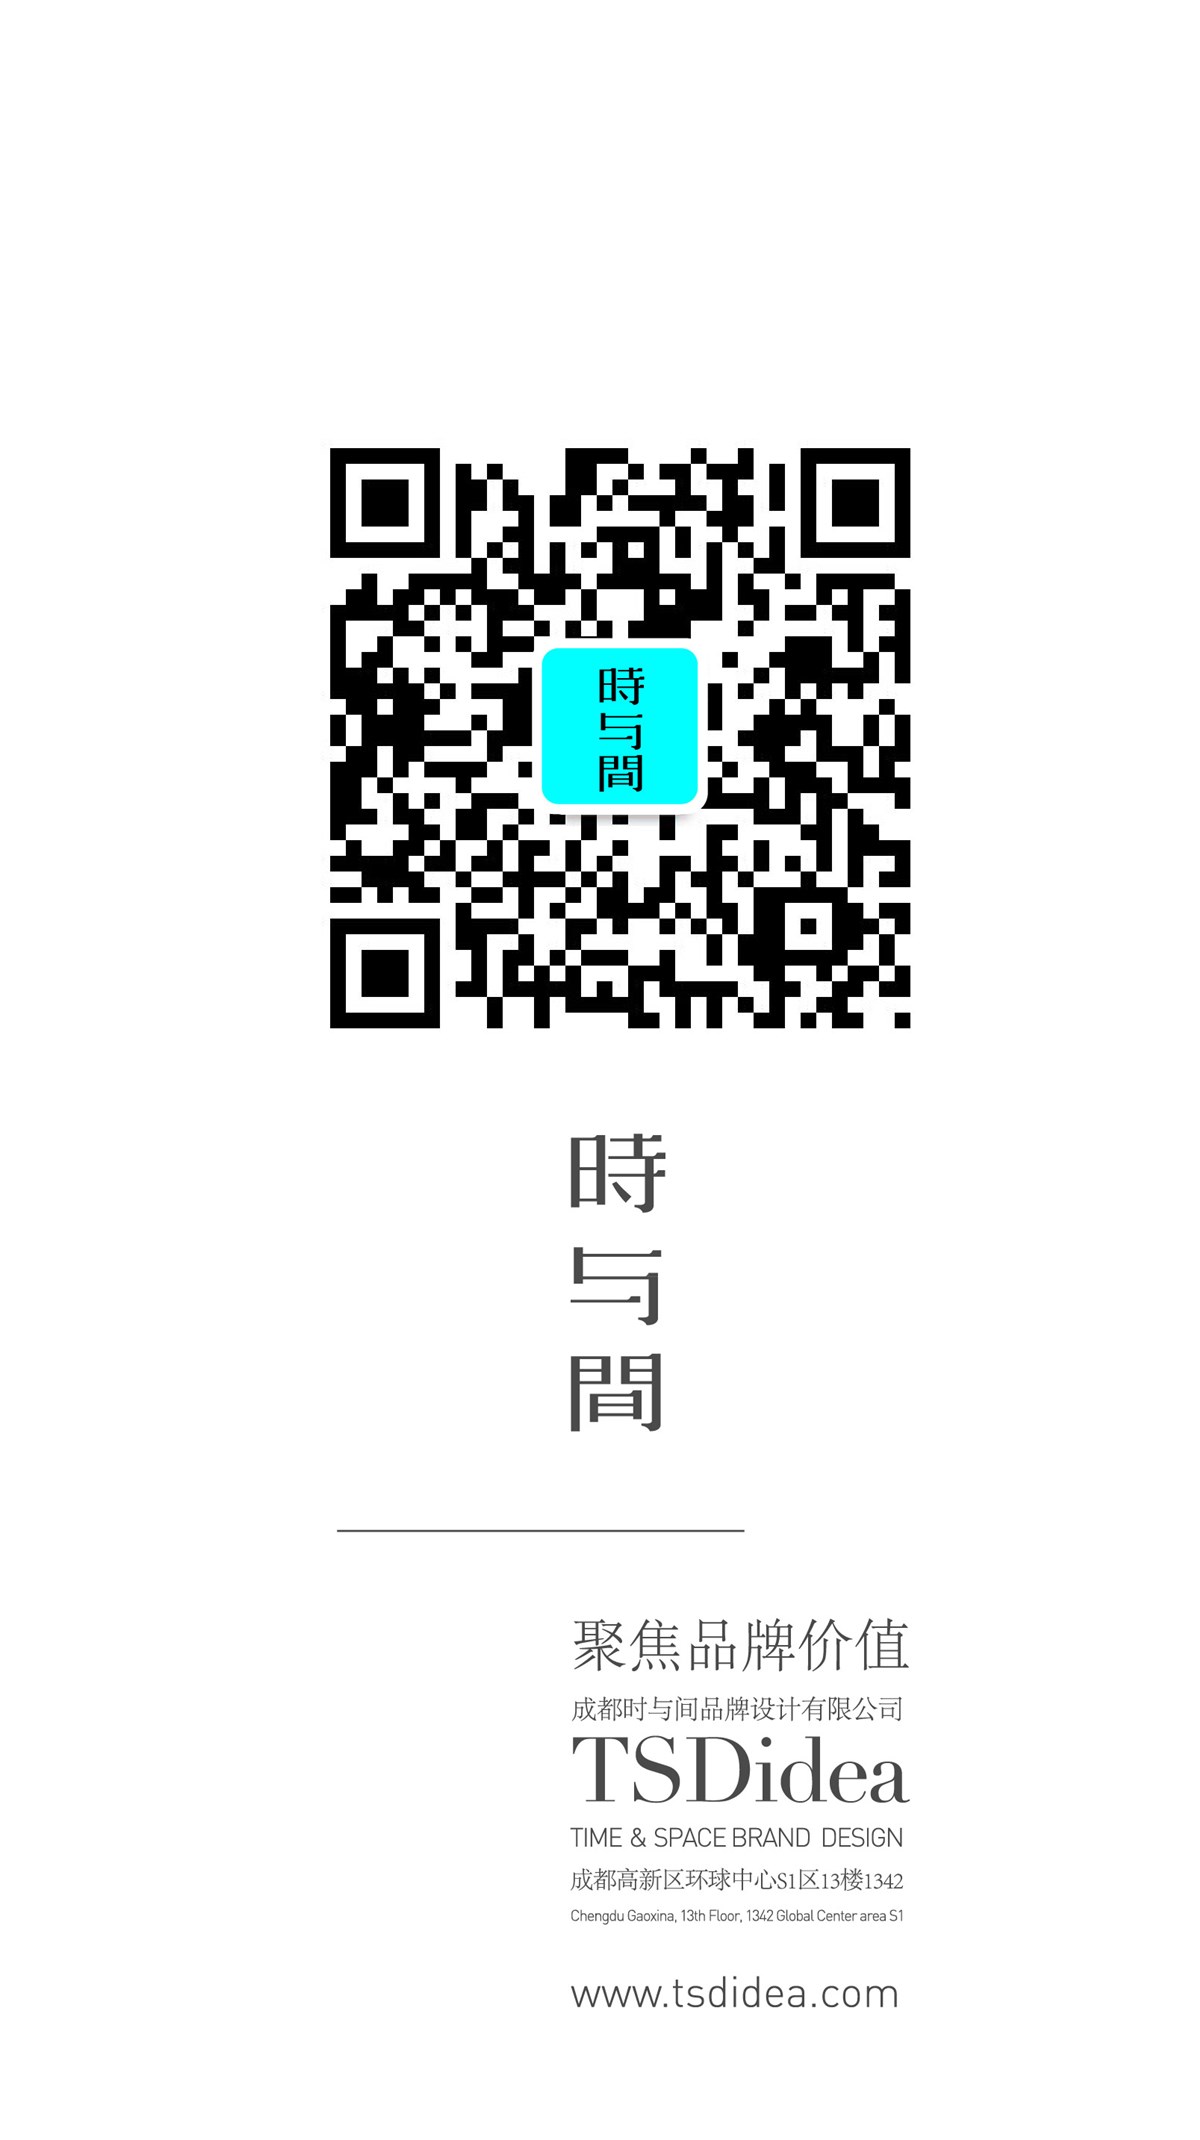 SCCI深圳市文化创意产业协会VI视觉形象--时与间设计